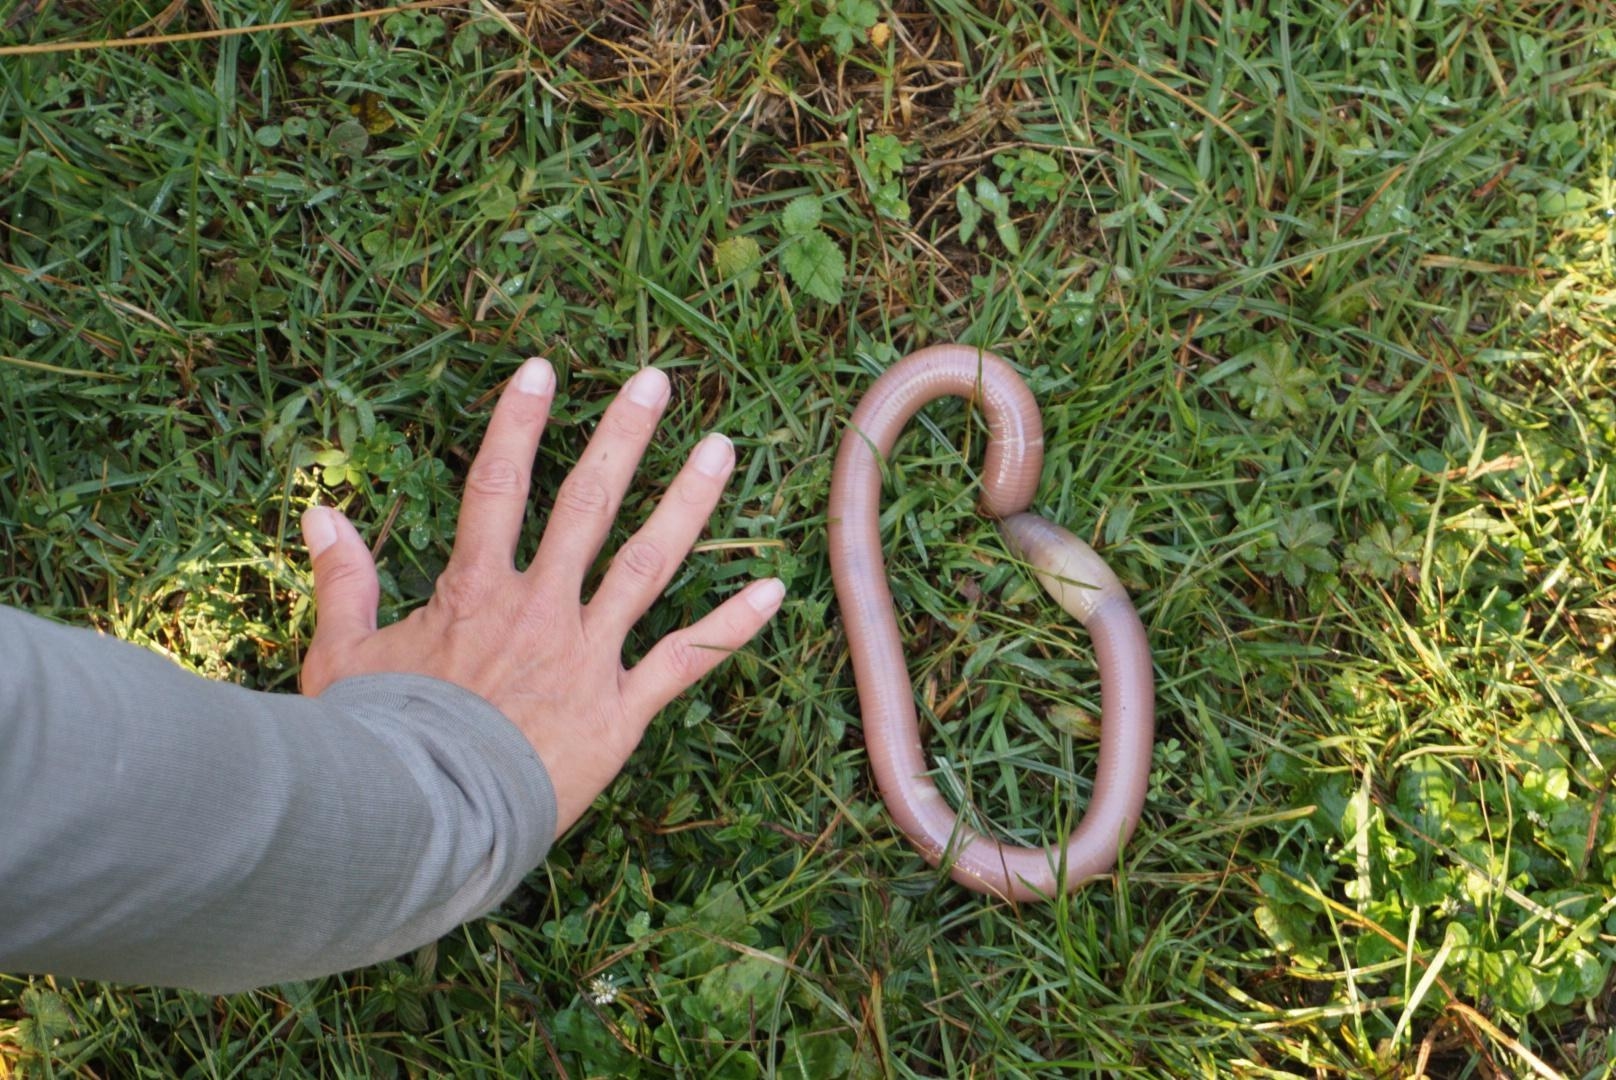 A giant earthworm